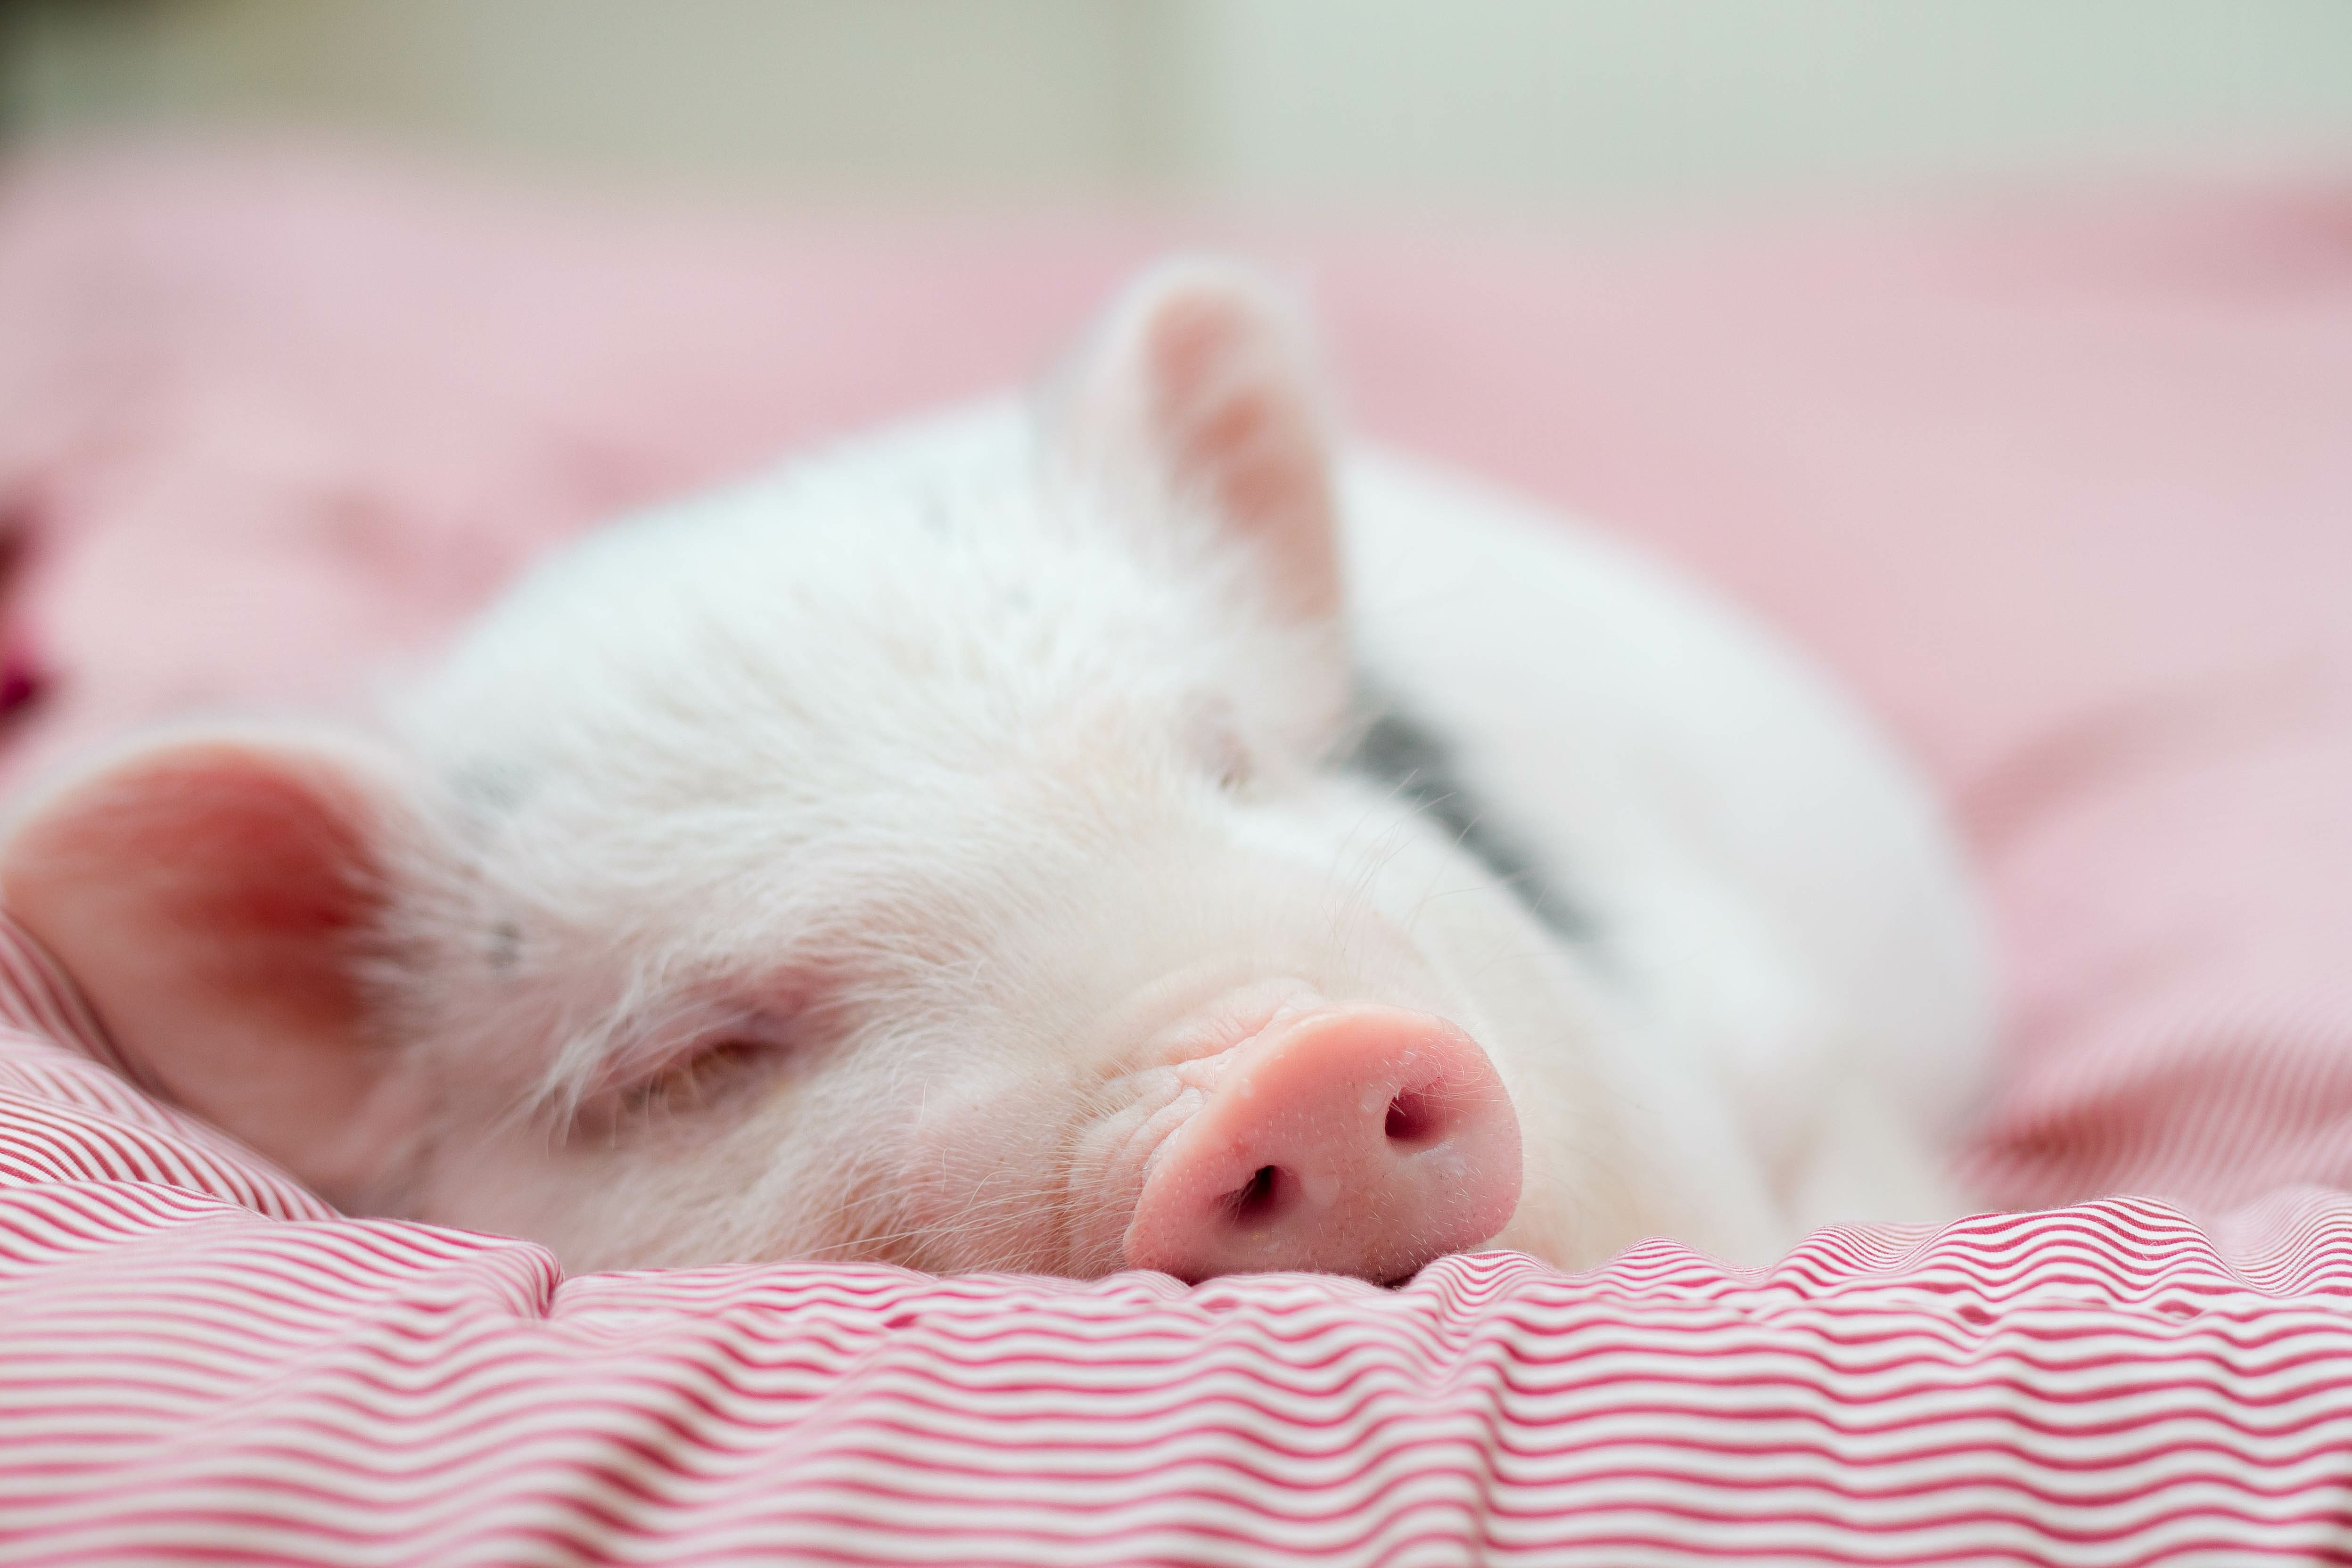 Piglet sleeping on a striped blanket